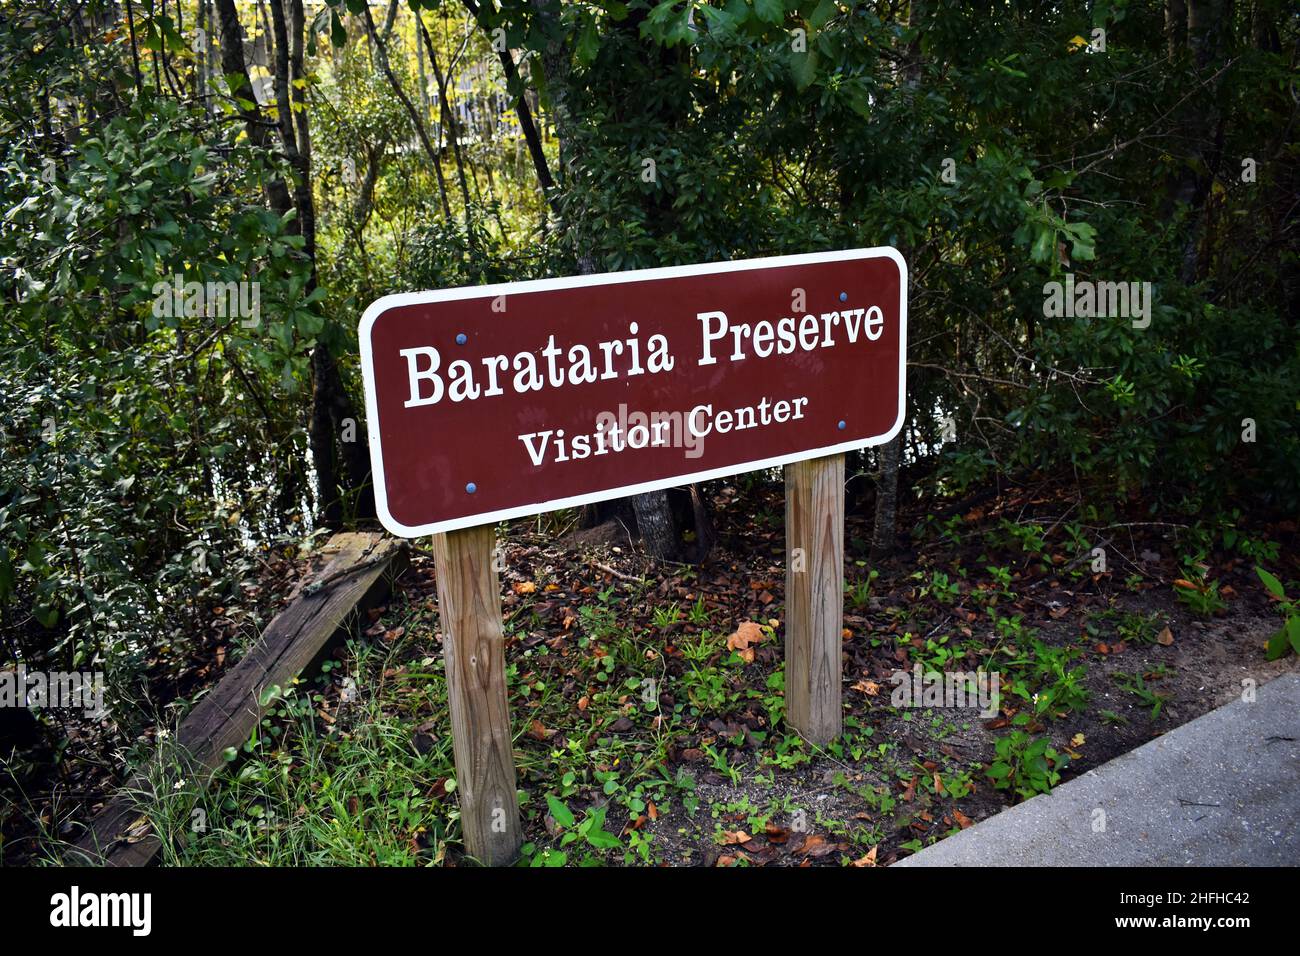 New Orleans, Louisiana. October 25, 2018: Barataria Preserve Visitor Center sign Stock Photo